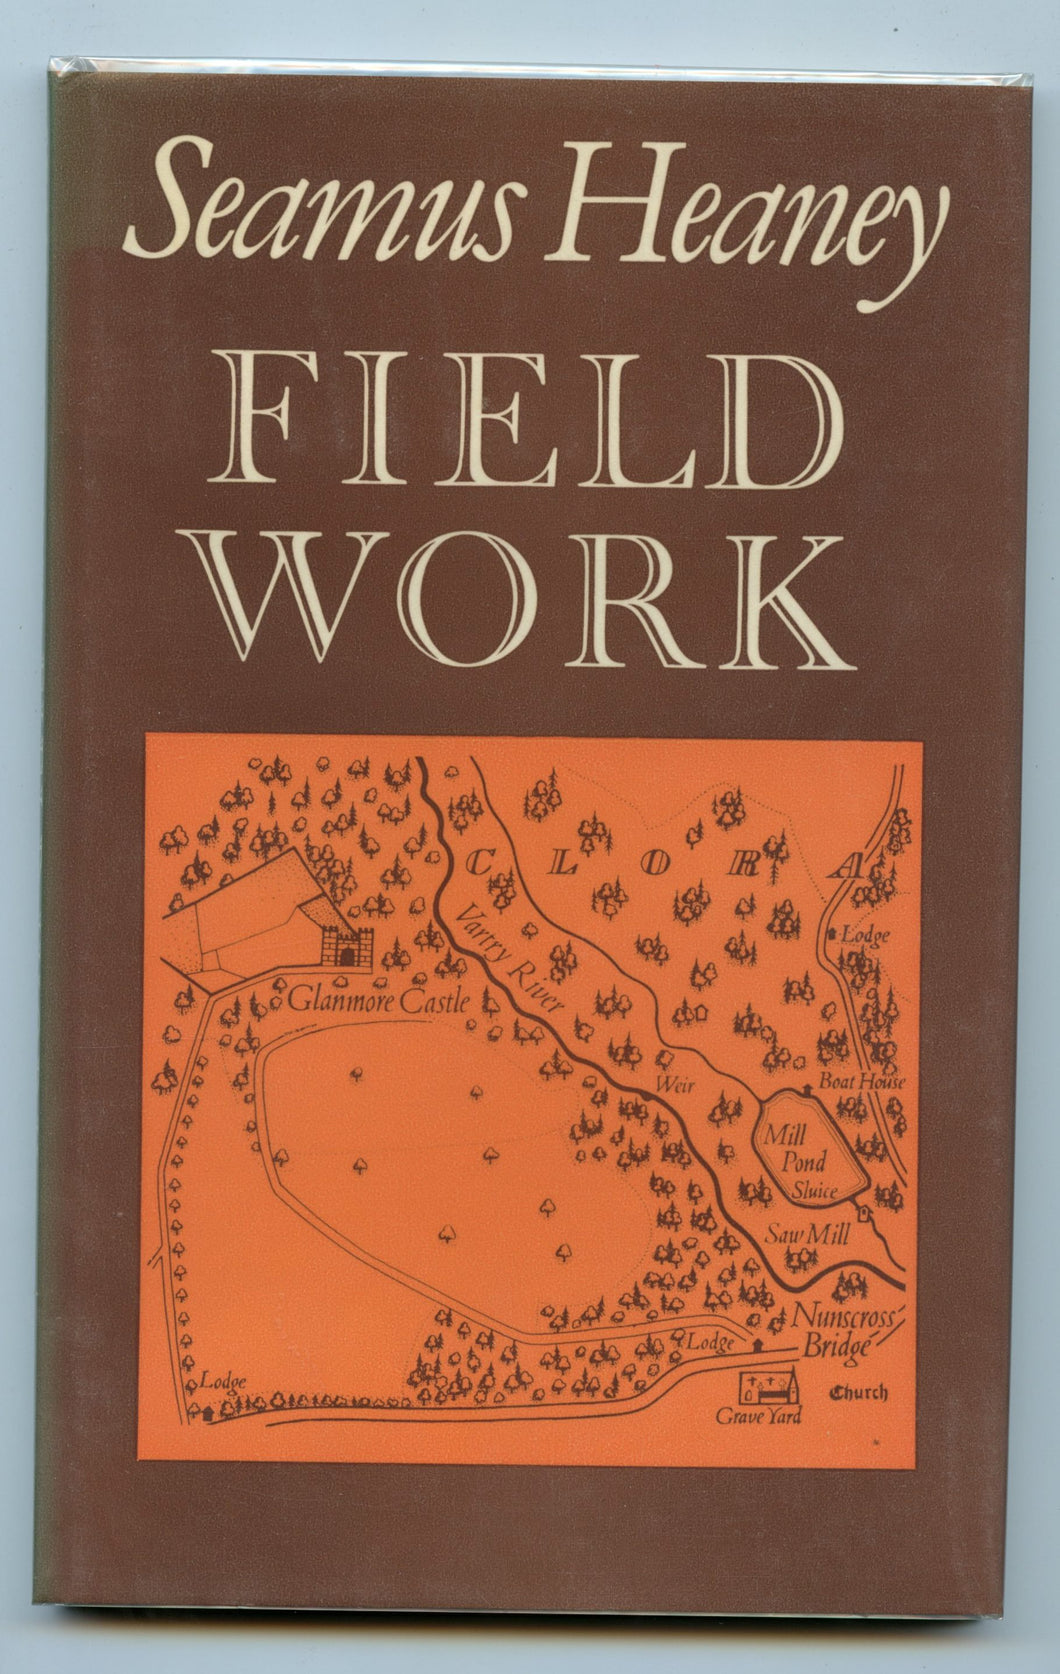 Field Work